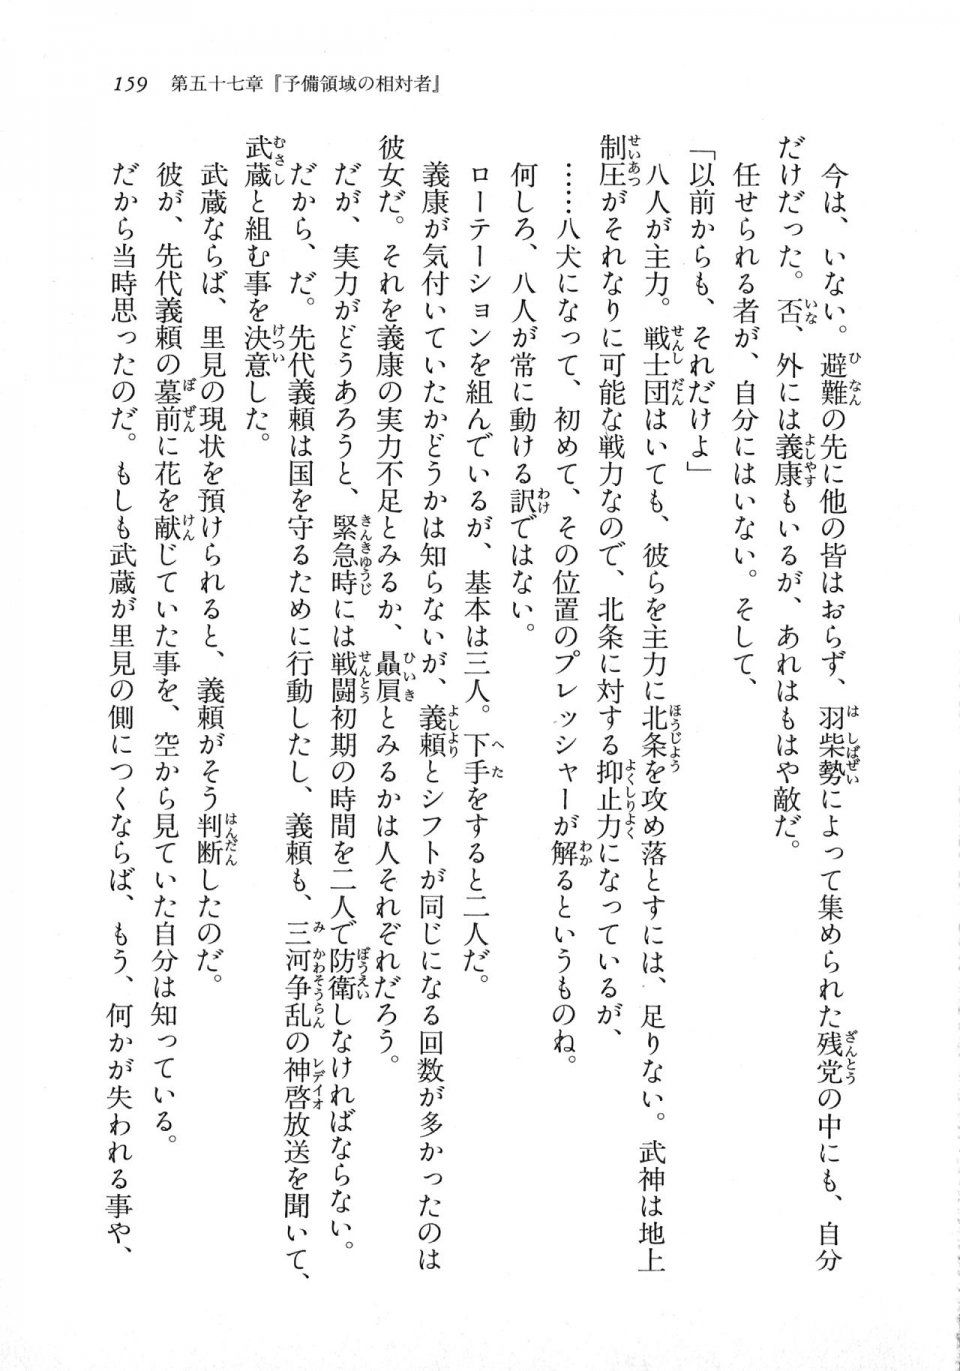 Kyoukai Senjou no Horizon LN Vol 18(7C) Part 1 - Photo #159